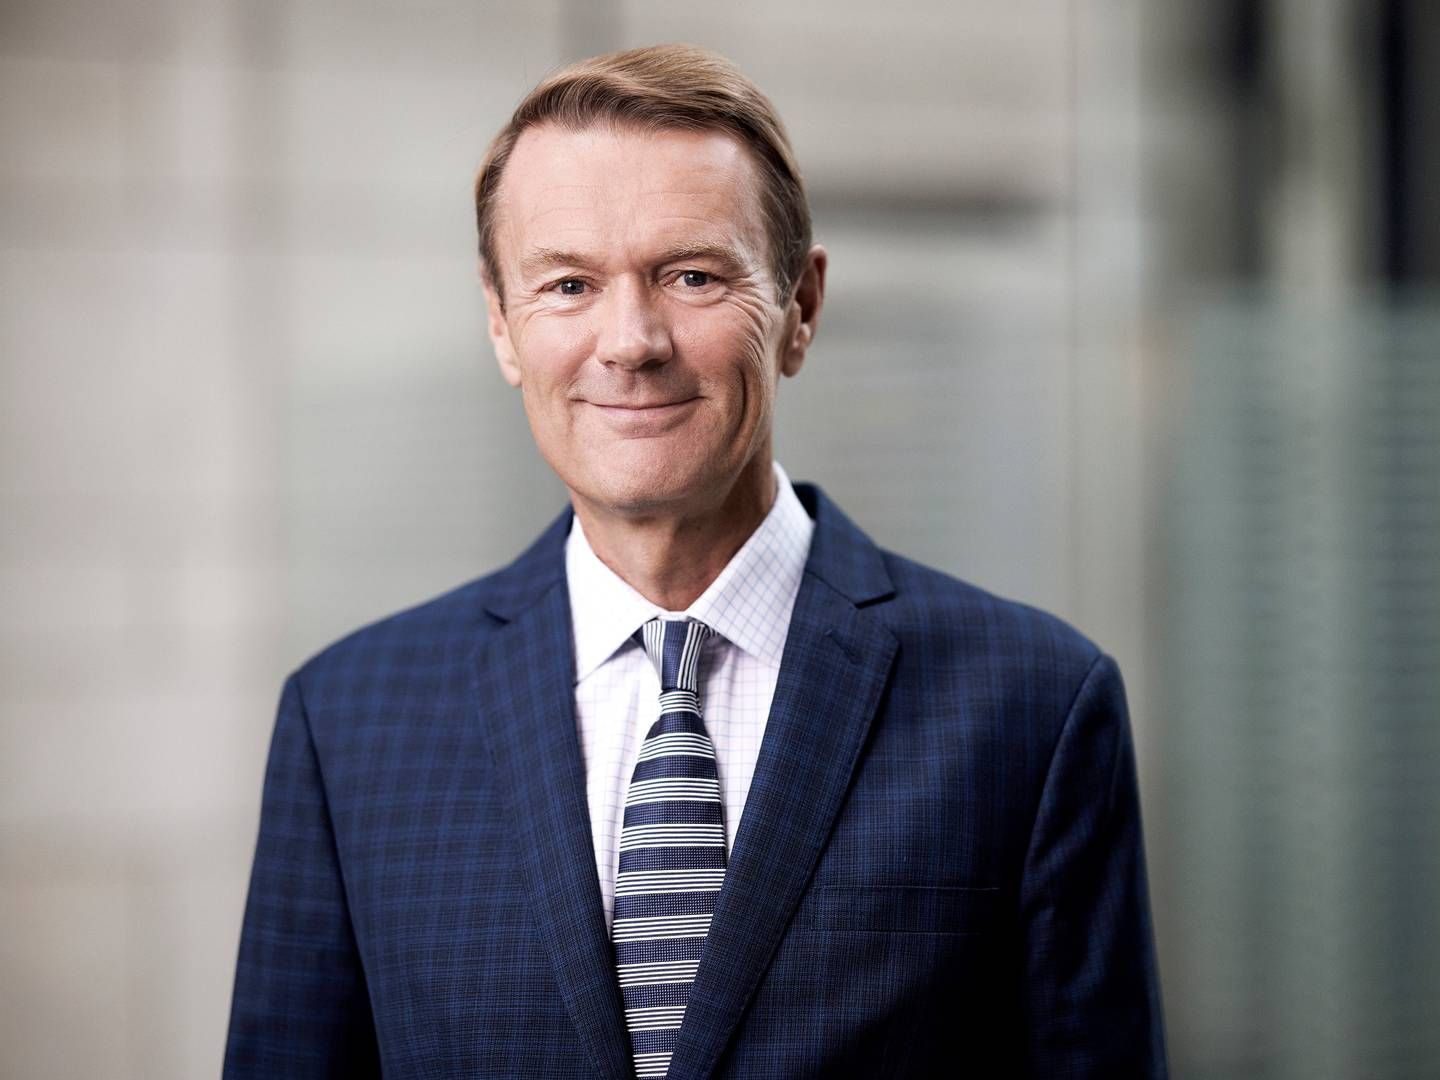 Den tidligere direktør i Bankinvest, Lars Bo Bertram, har overtaget posten som bestyrelsesformand i pensionskassen P+. | Foto: Bankinvest